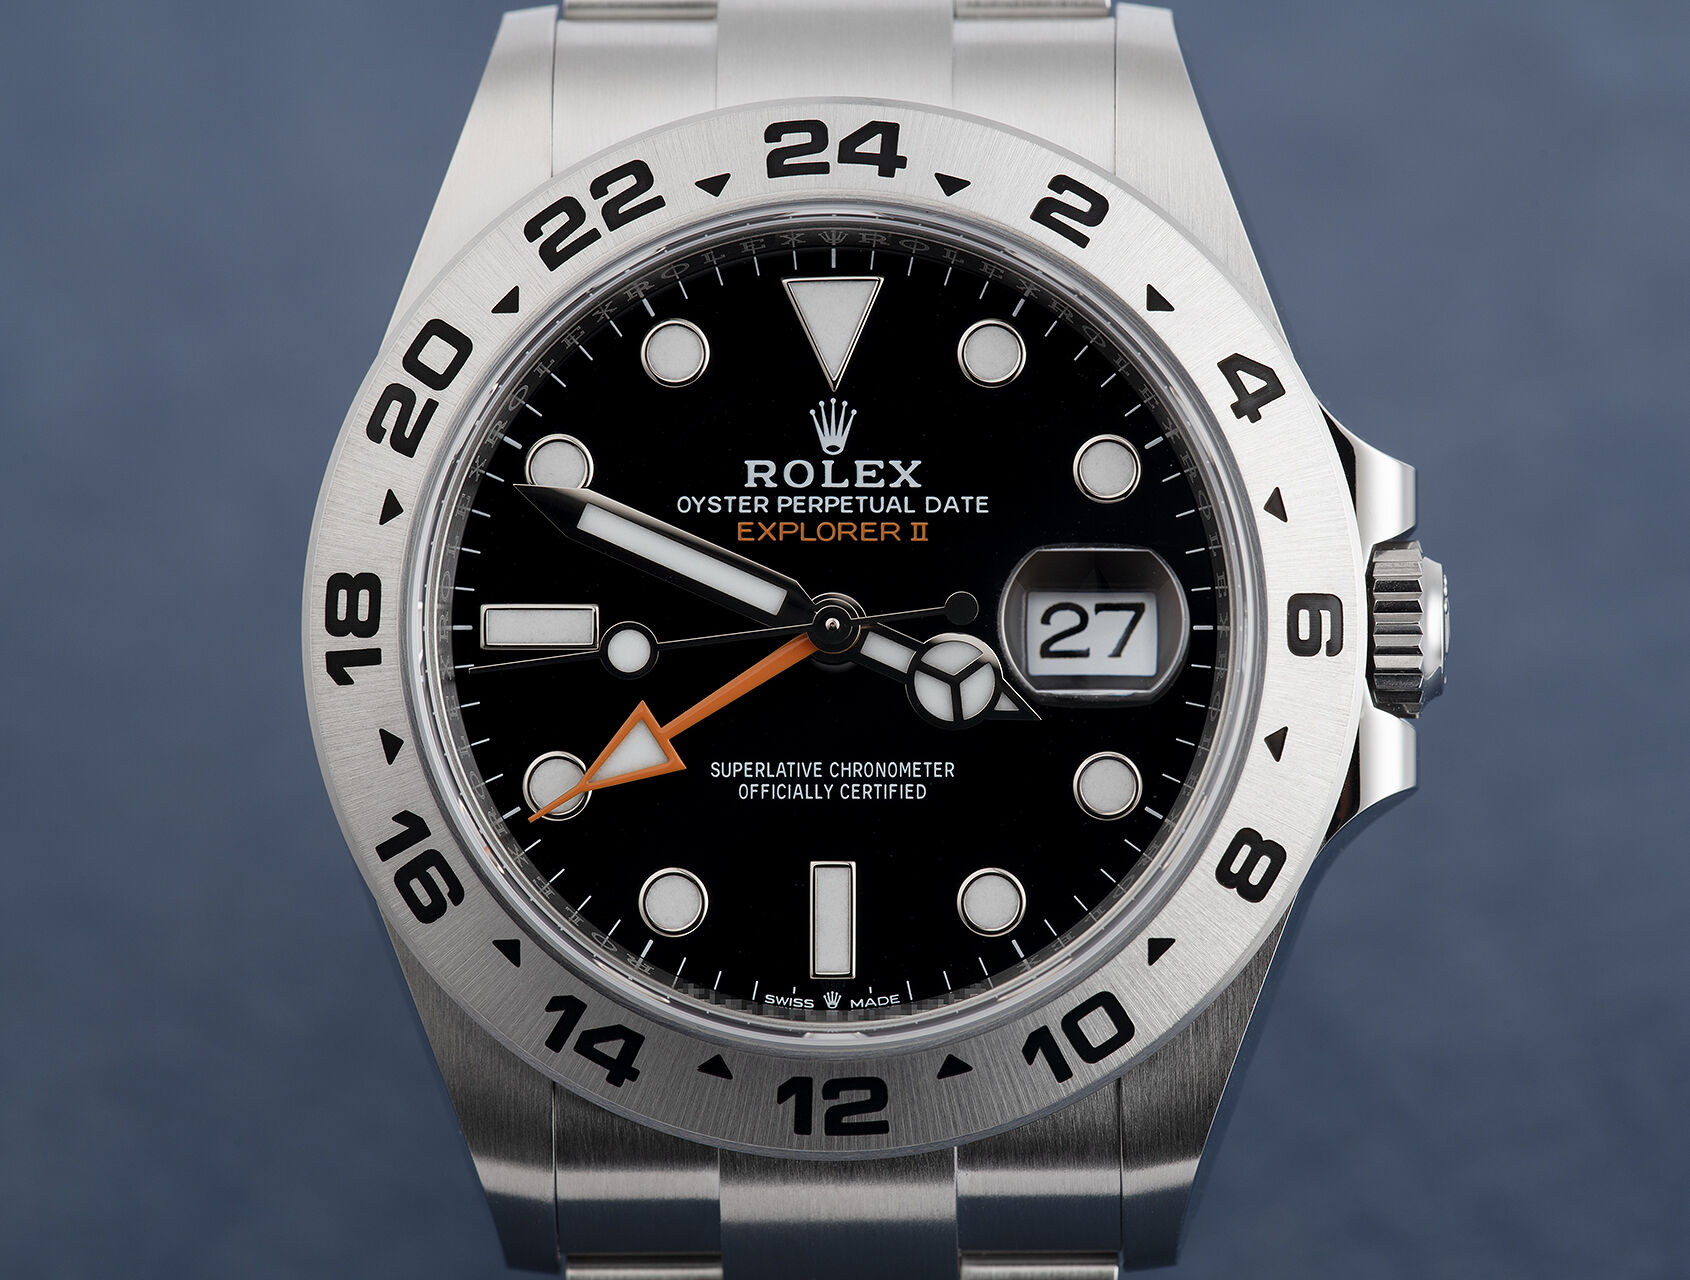 ref 226570 | 226570 - Latest Model | Rolex Explorer II